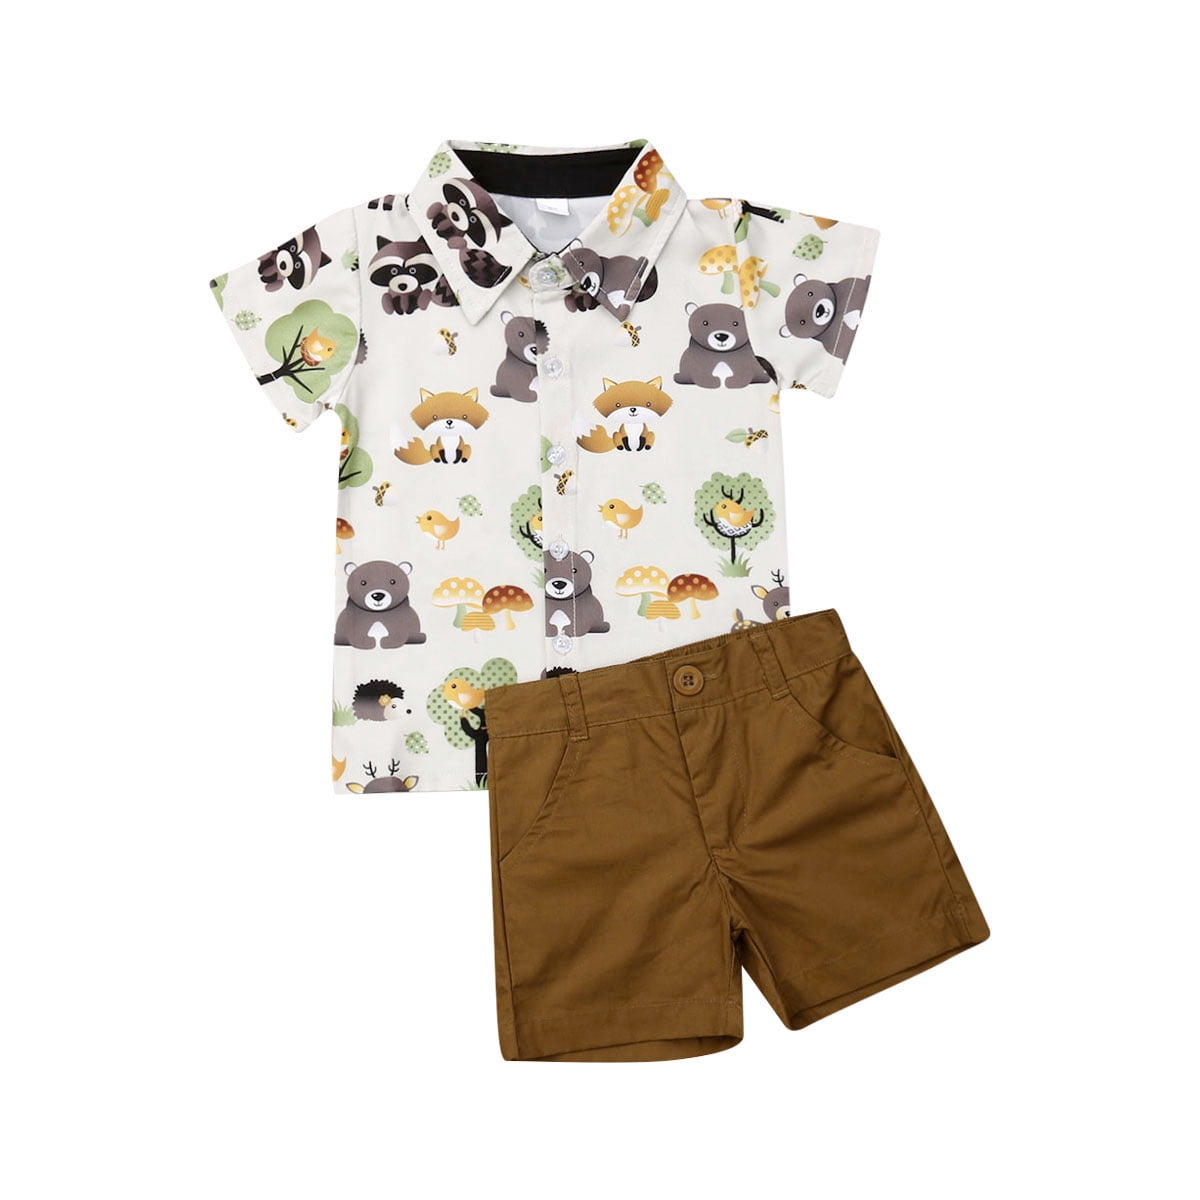 Kehen Baby Boys Short Sets Infant Toddler Short Sleeve Plaid Shirts Tops Denim Shorts Pants Summer Outfits